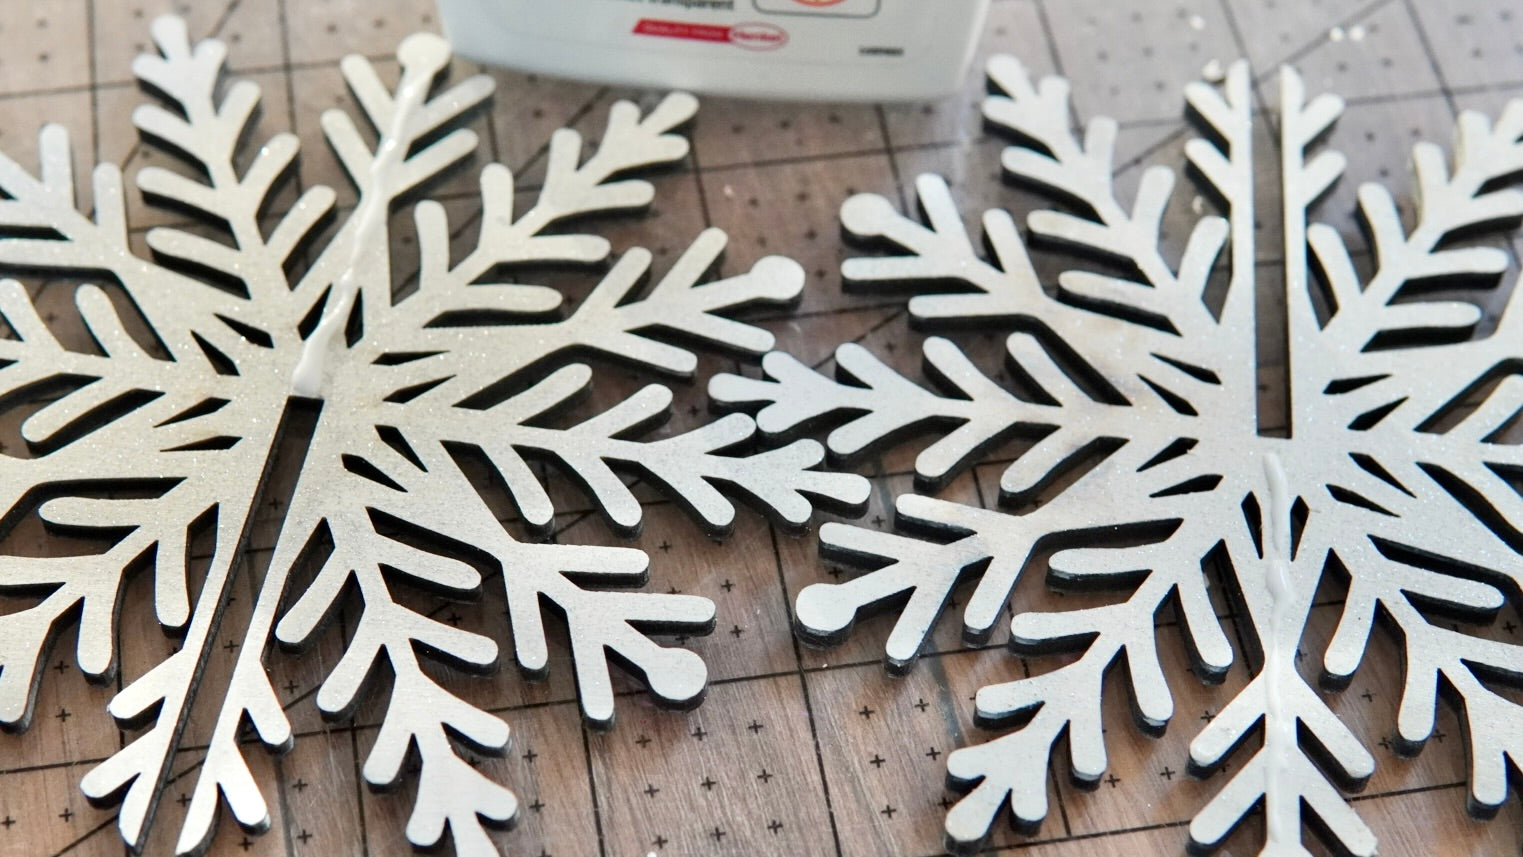 DIY snowflakes